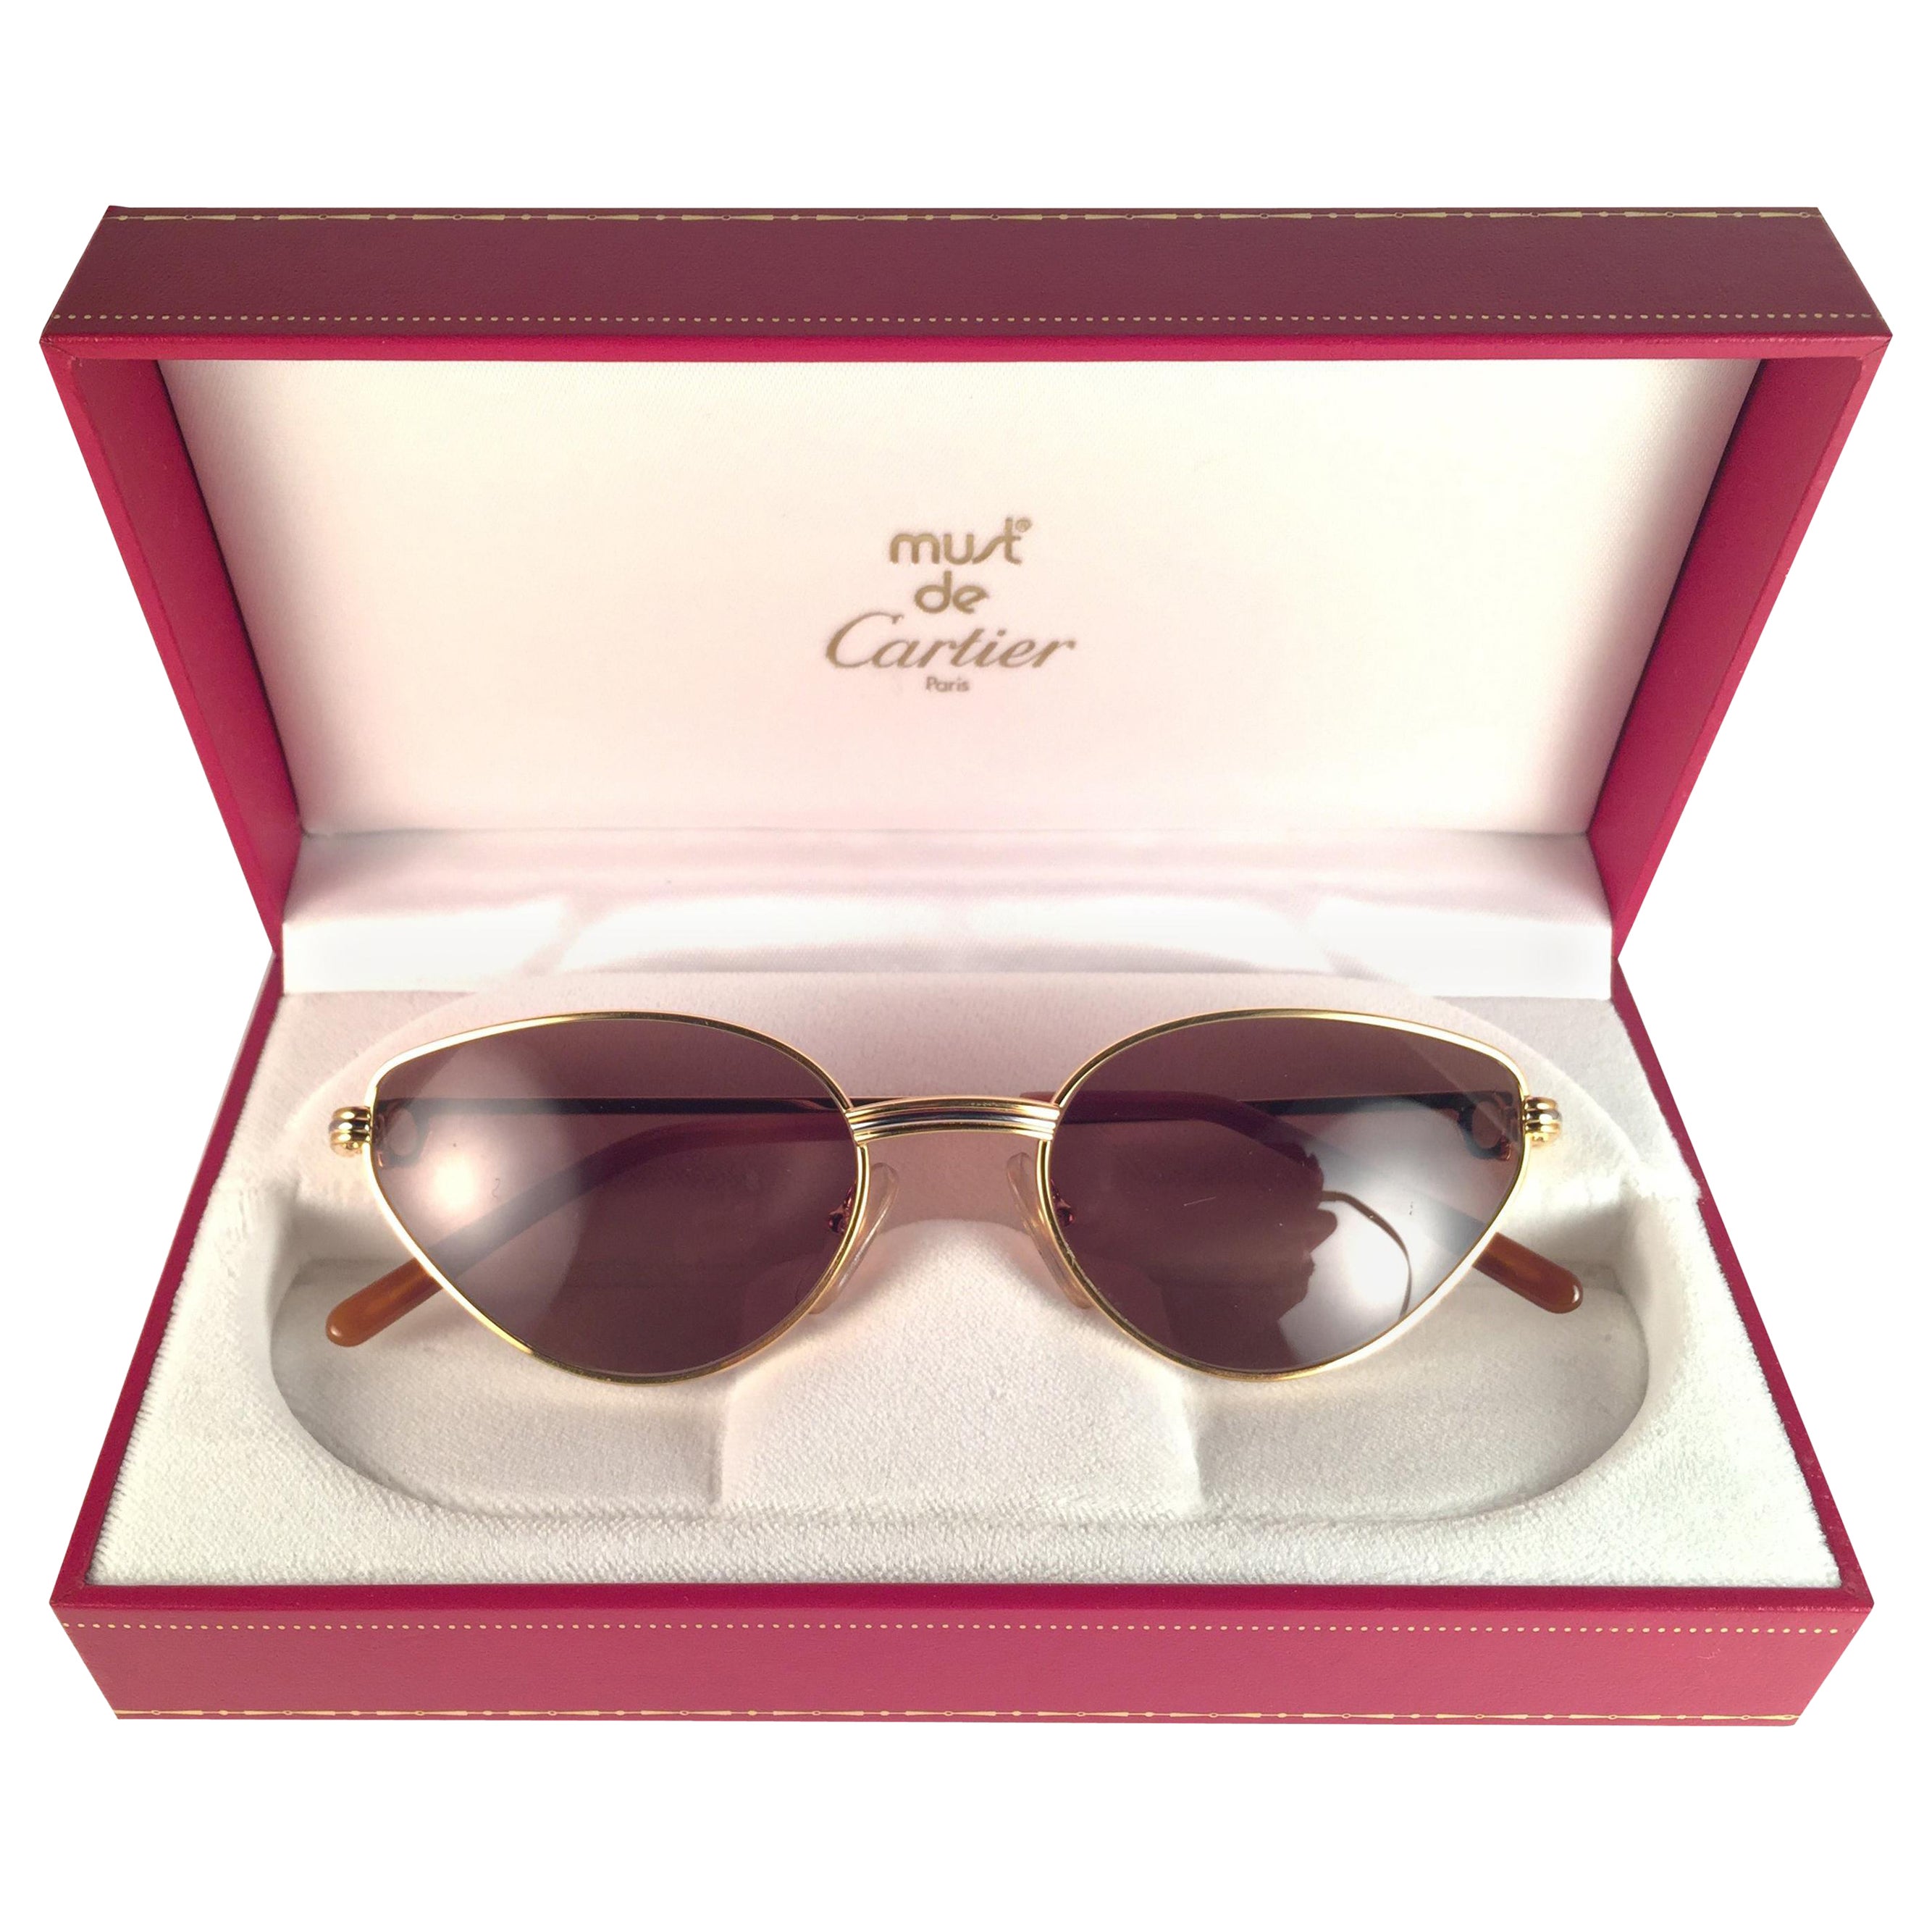 Neu Cartier Rivoli Vendome 52mm Katzenauge-Sonnenbrille 18k schwer versilbert Frankreich im Angebot